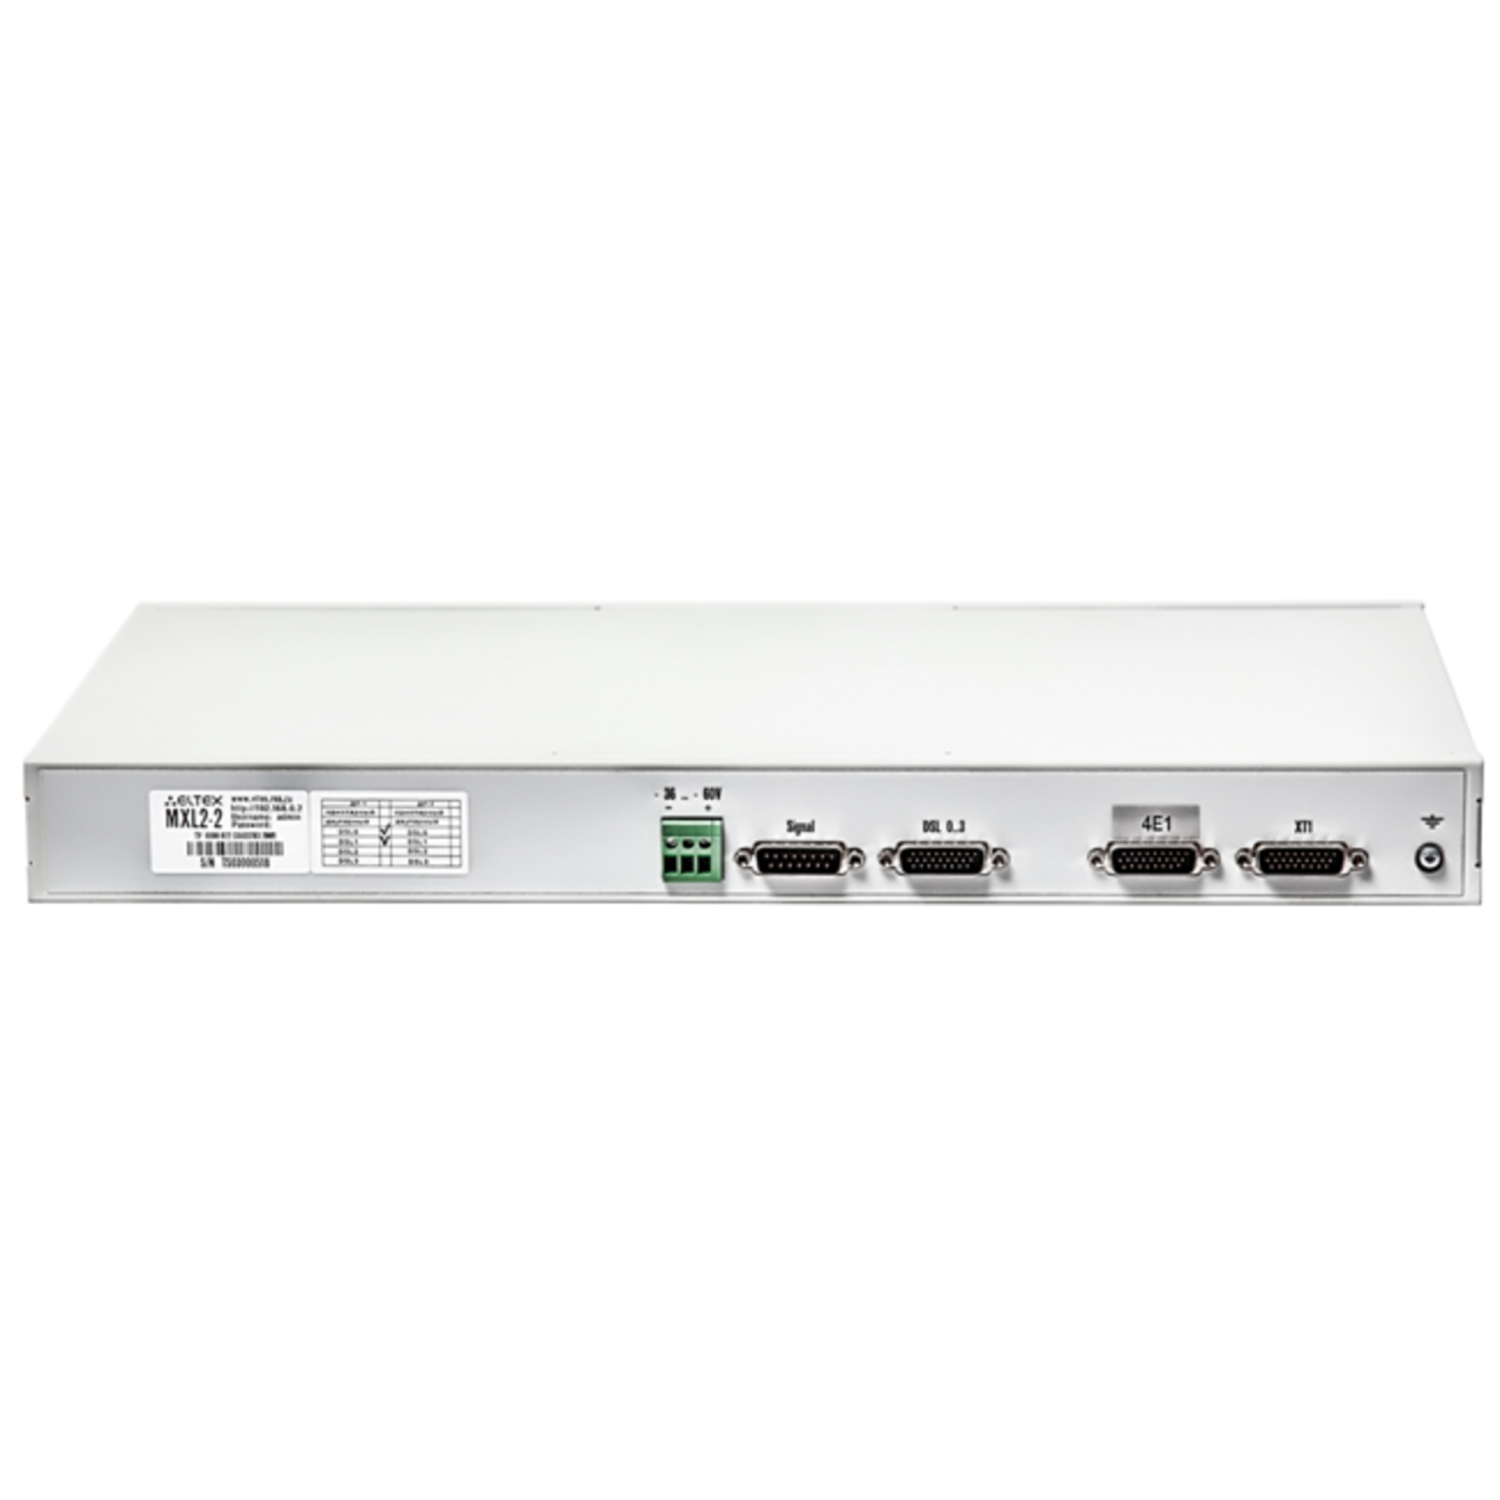 SHDSL-модем MXL2-2, базовый блок, 4хRJ45 (LAN), 2 места для субмодулей М4Е1/4И15, 2 интерфейса SHDSL, 11,4 Мбит/с